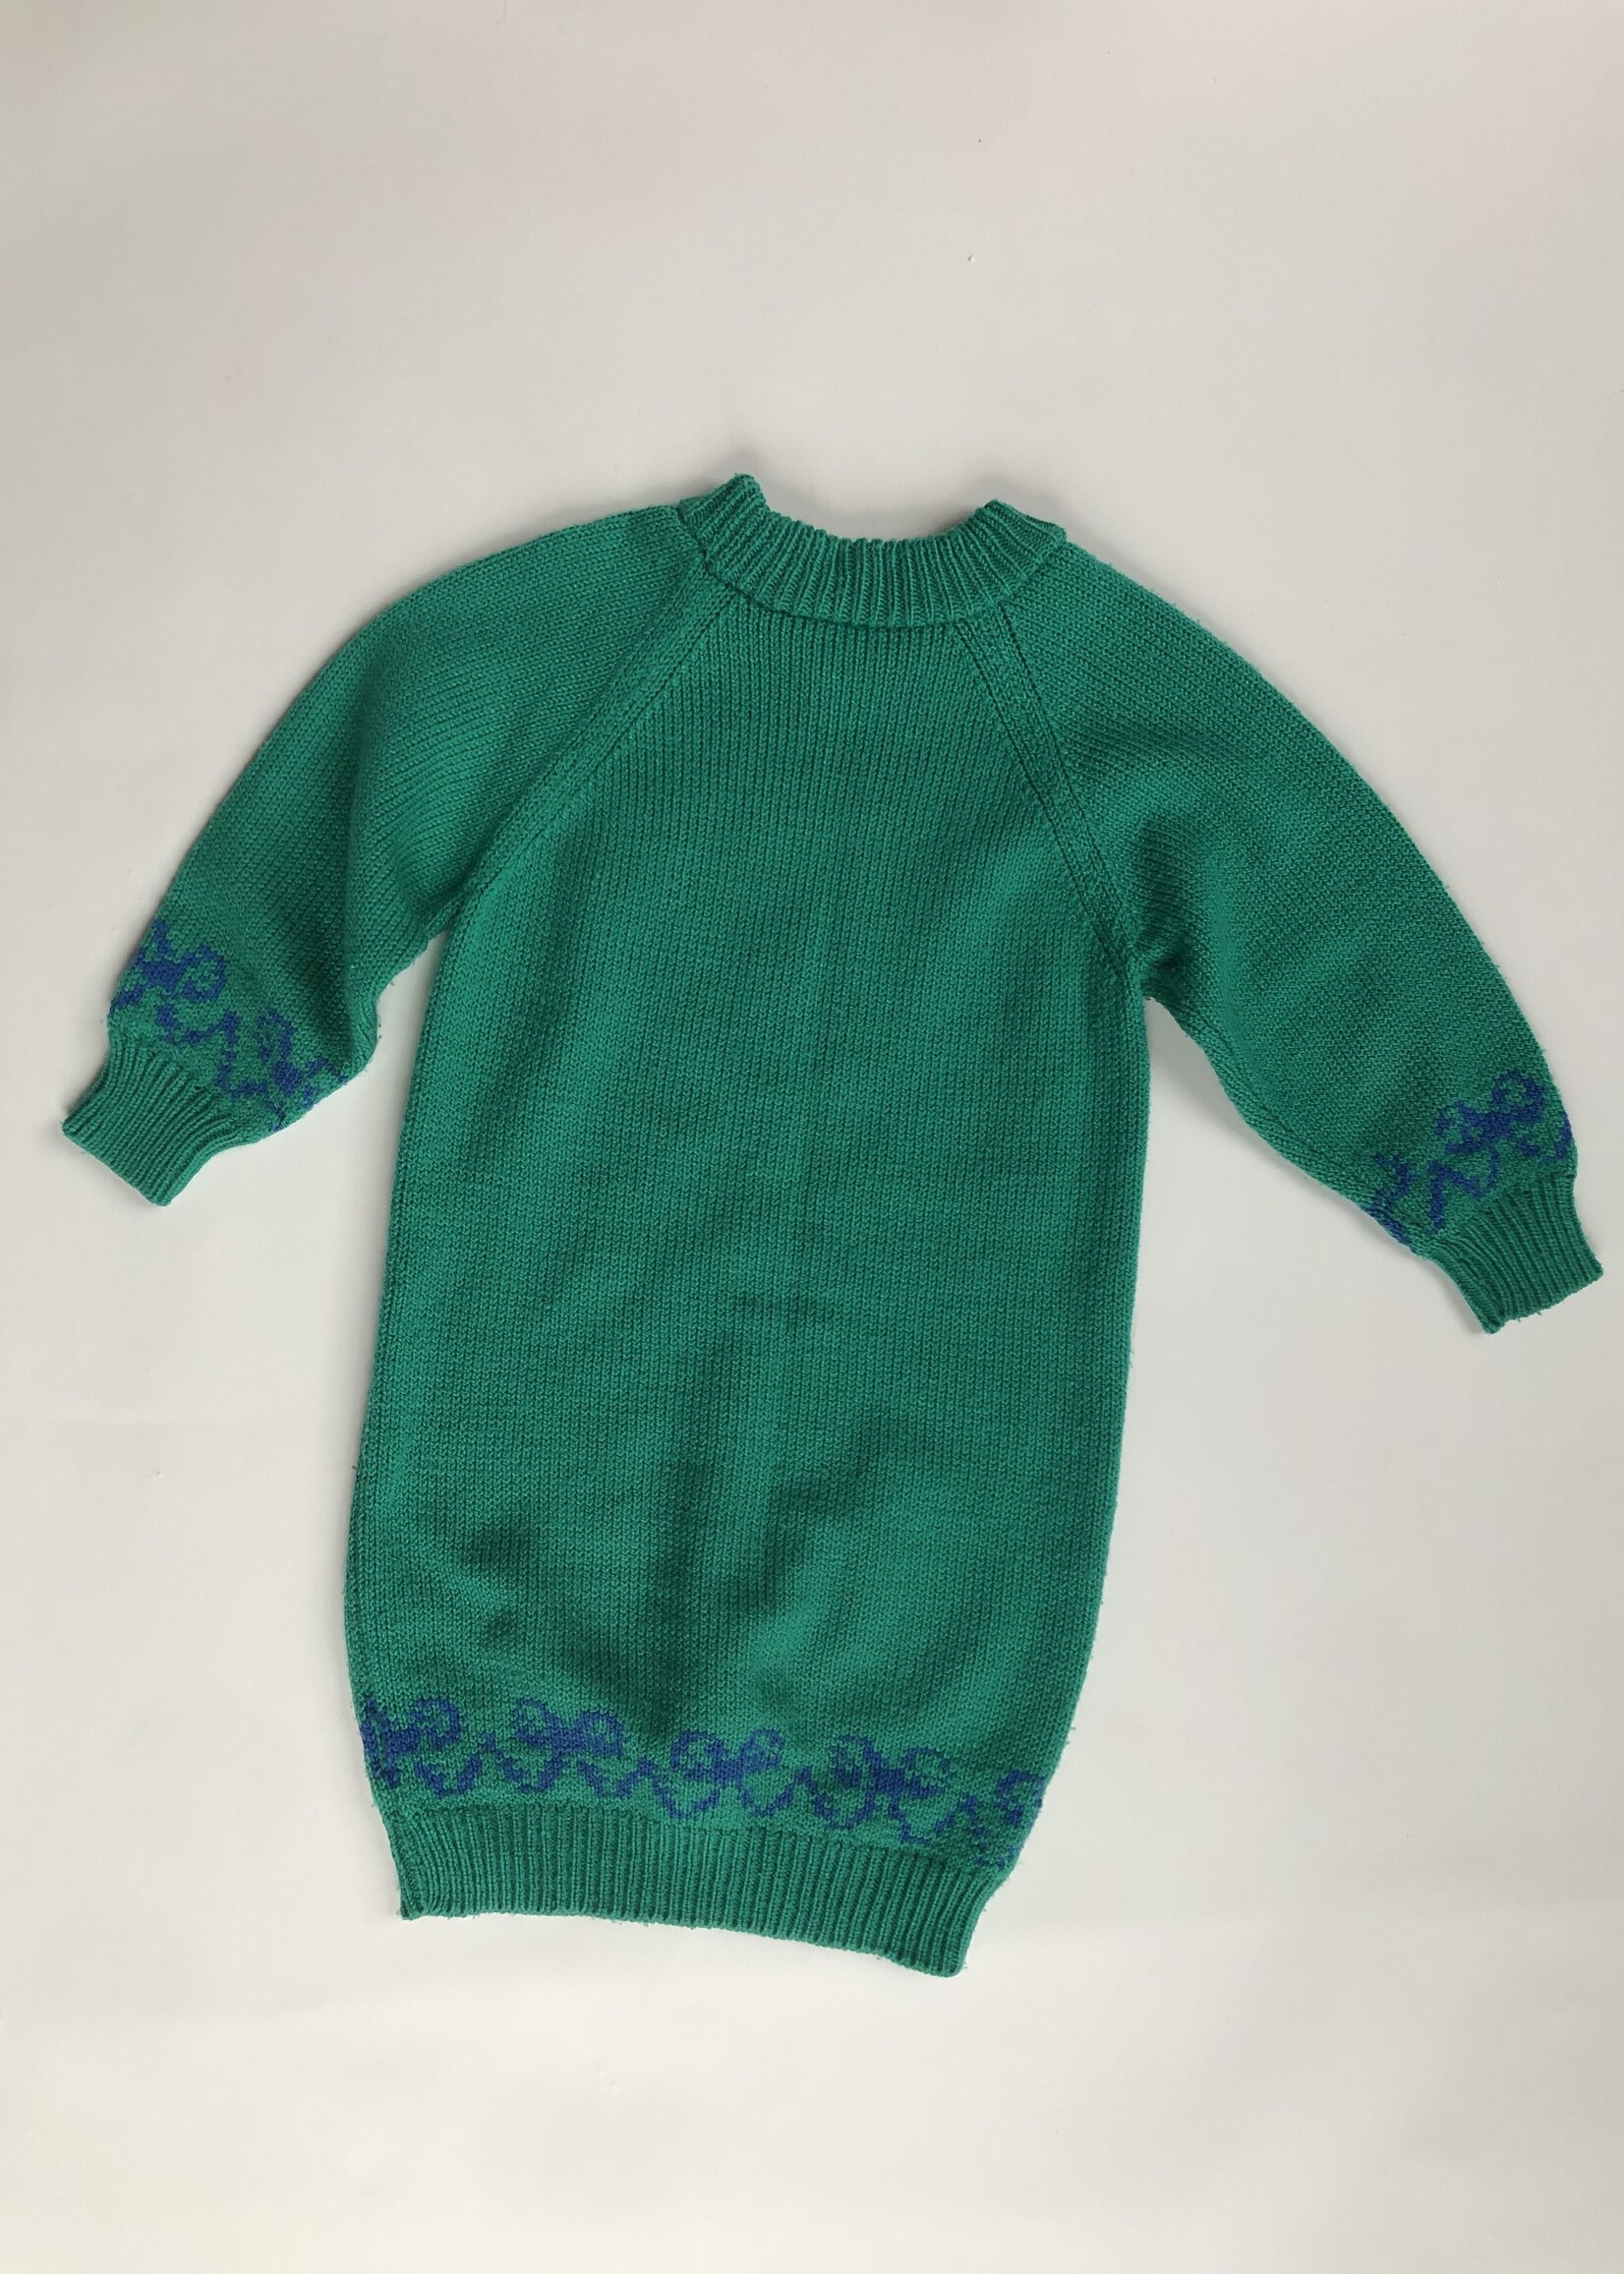 Handmade Knitted Barbie sweater dress 5-6y